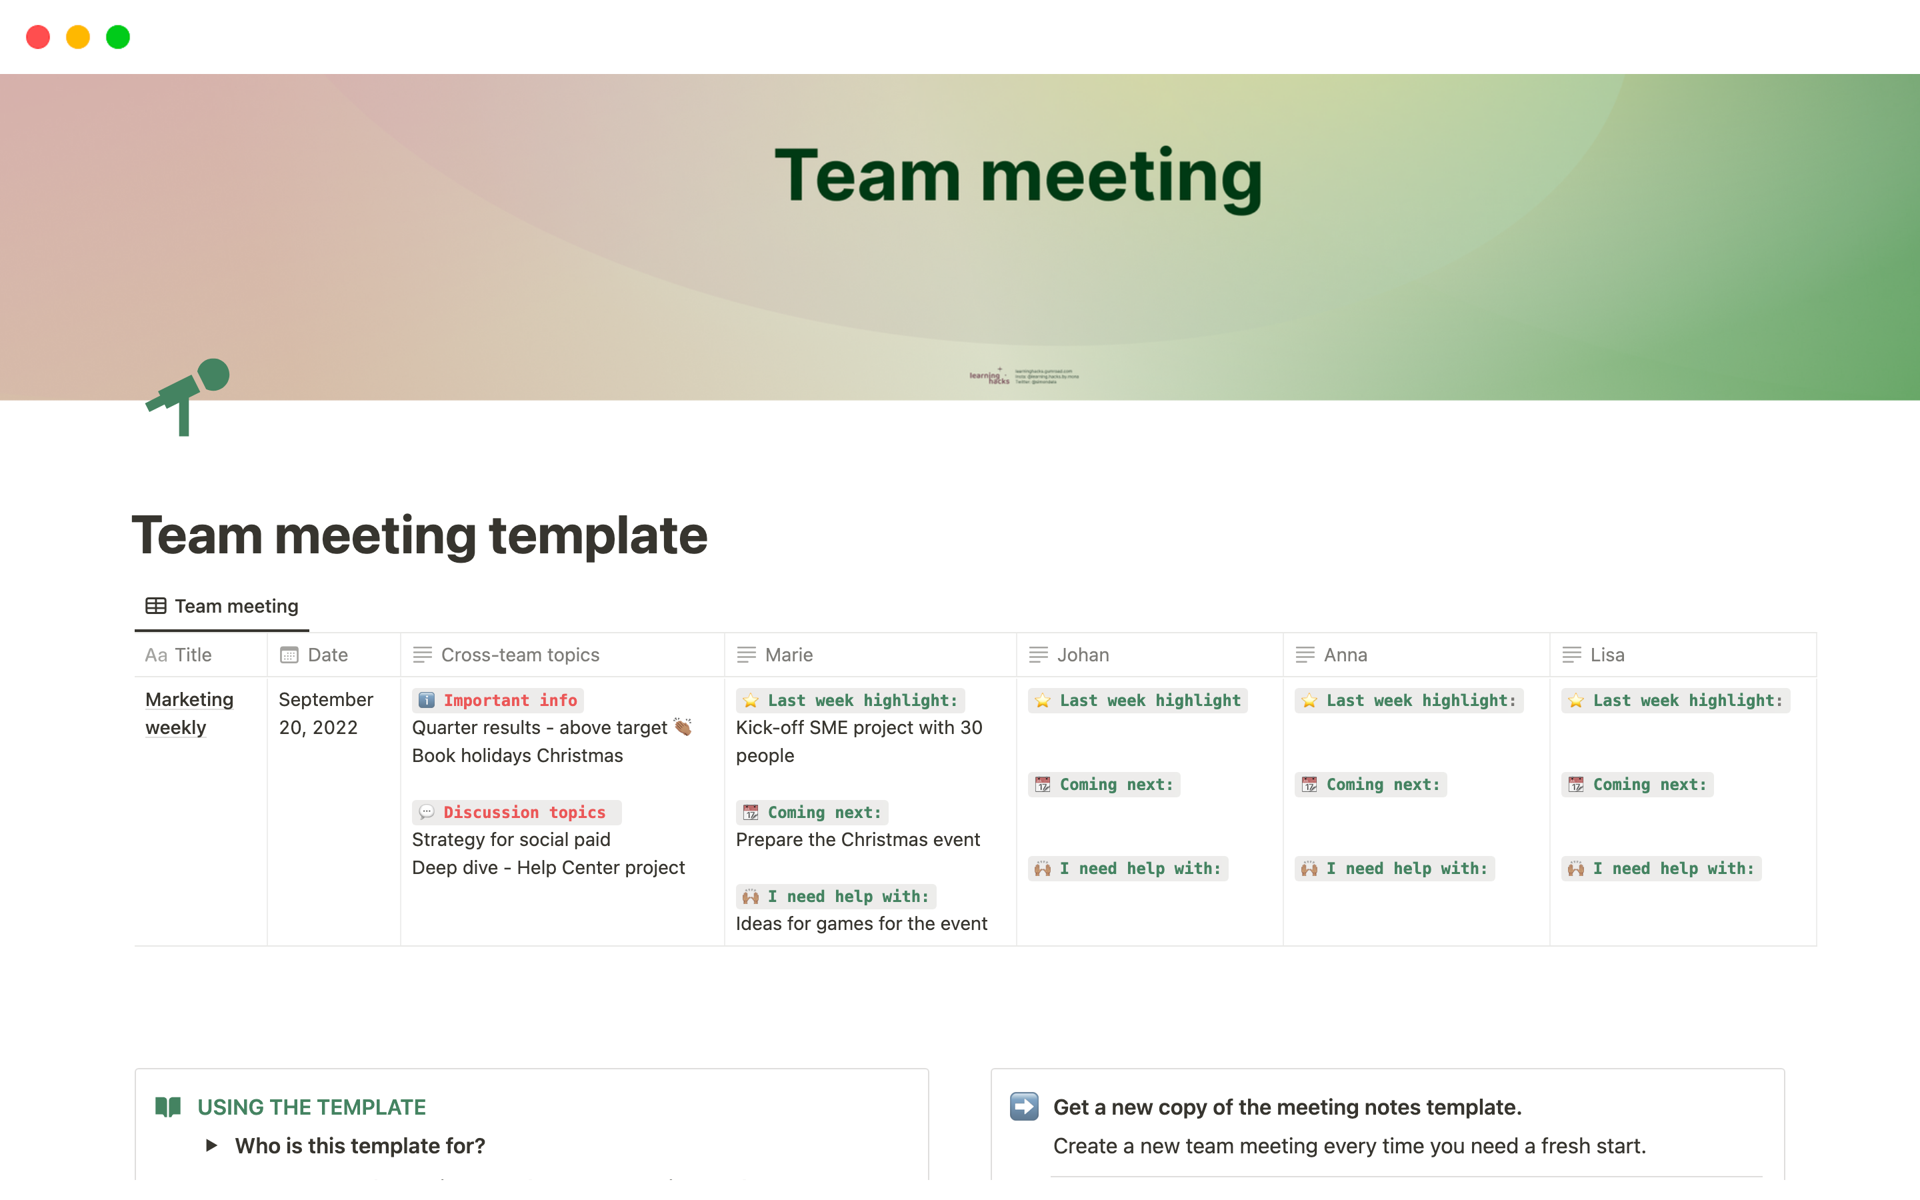 Aperçu du modèle de Team meeting template